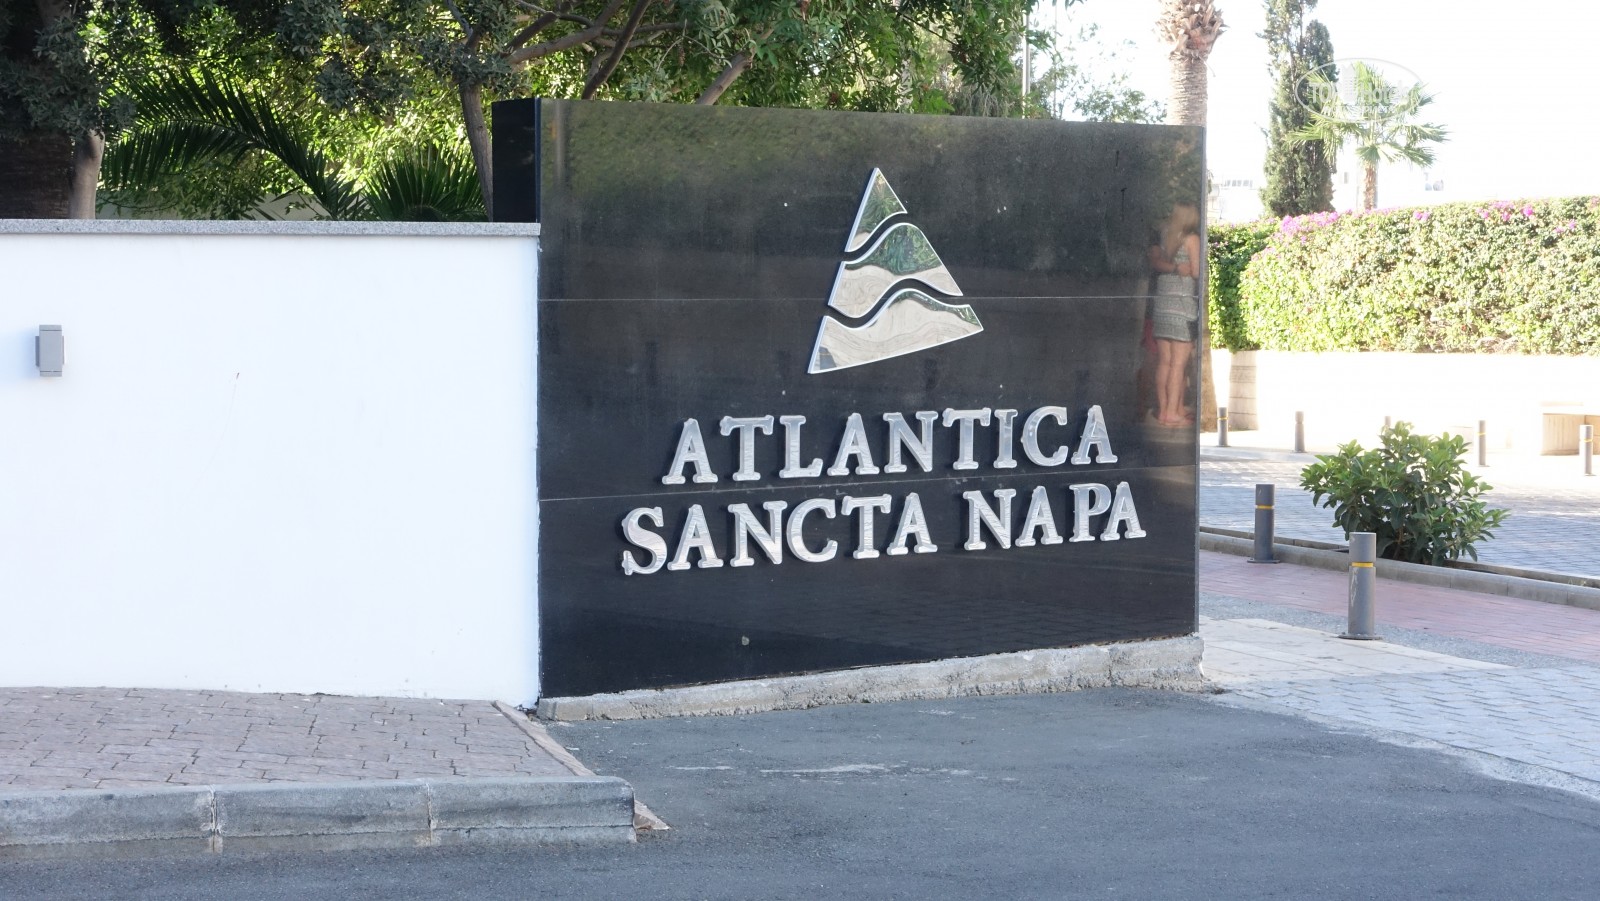 Atlantica Sancta Napa Cyprus prices